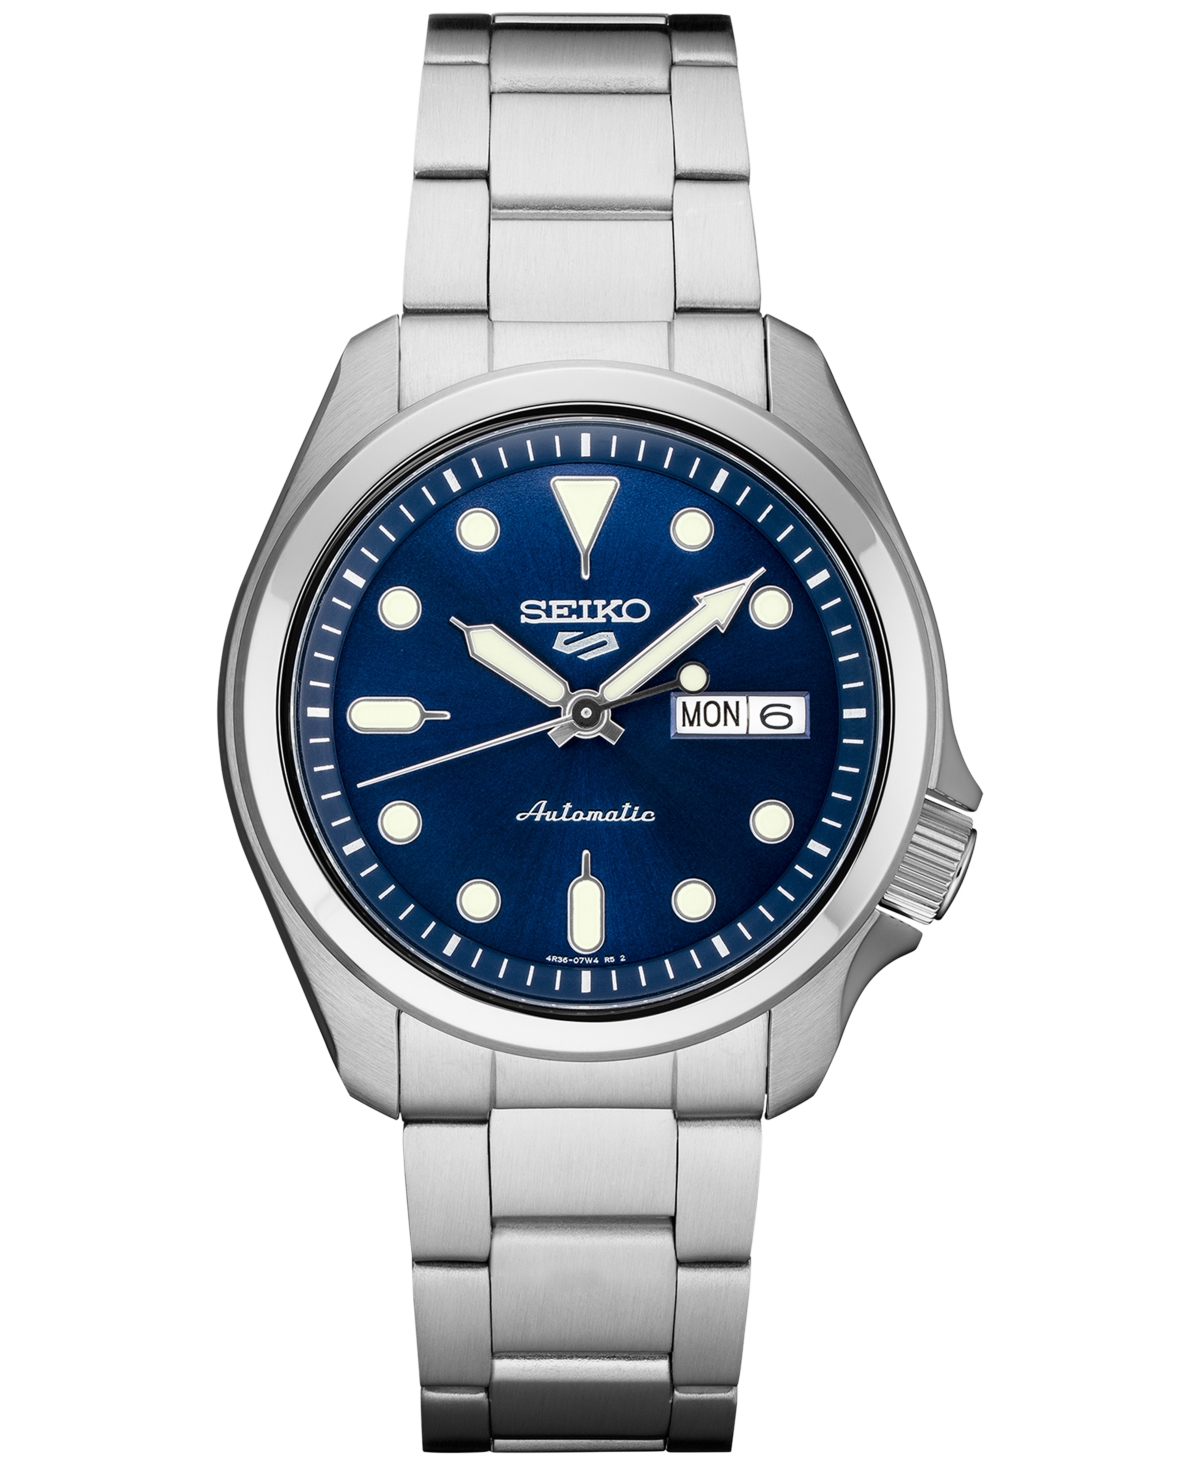 Men's Automatic 5 Sports Stainless Steel Bracelet Watch 43mm - Blue